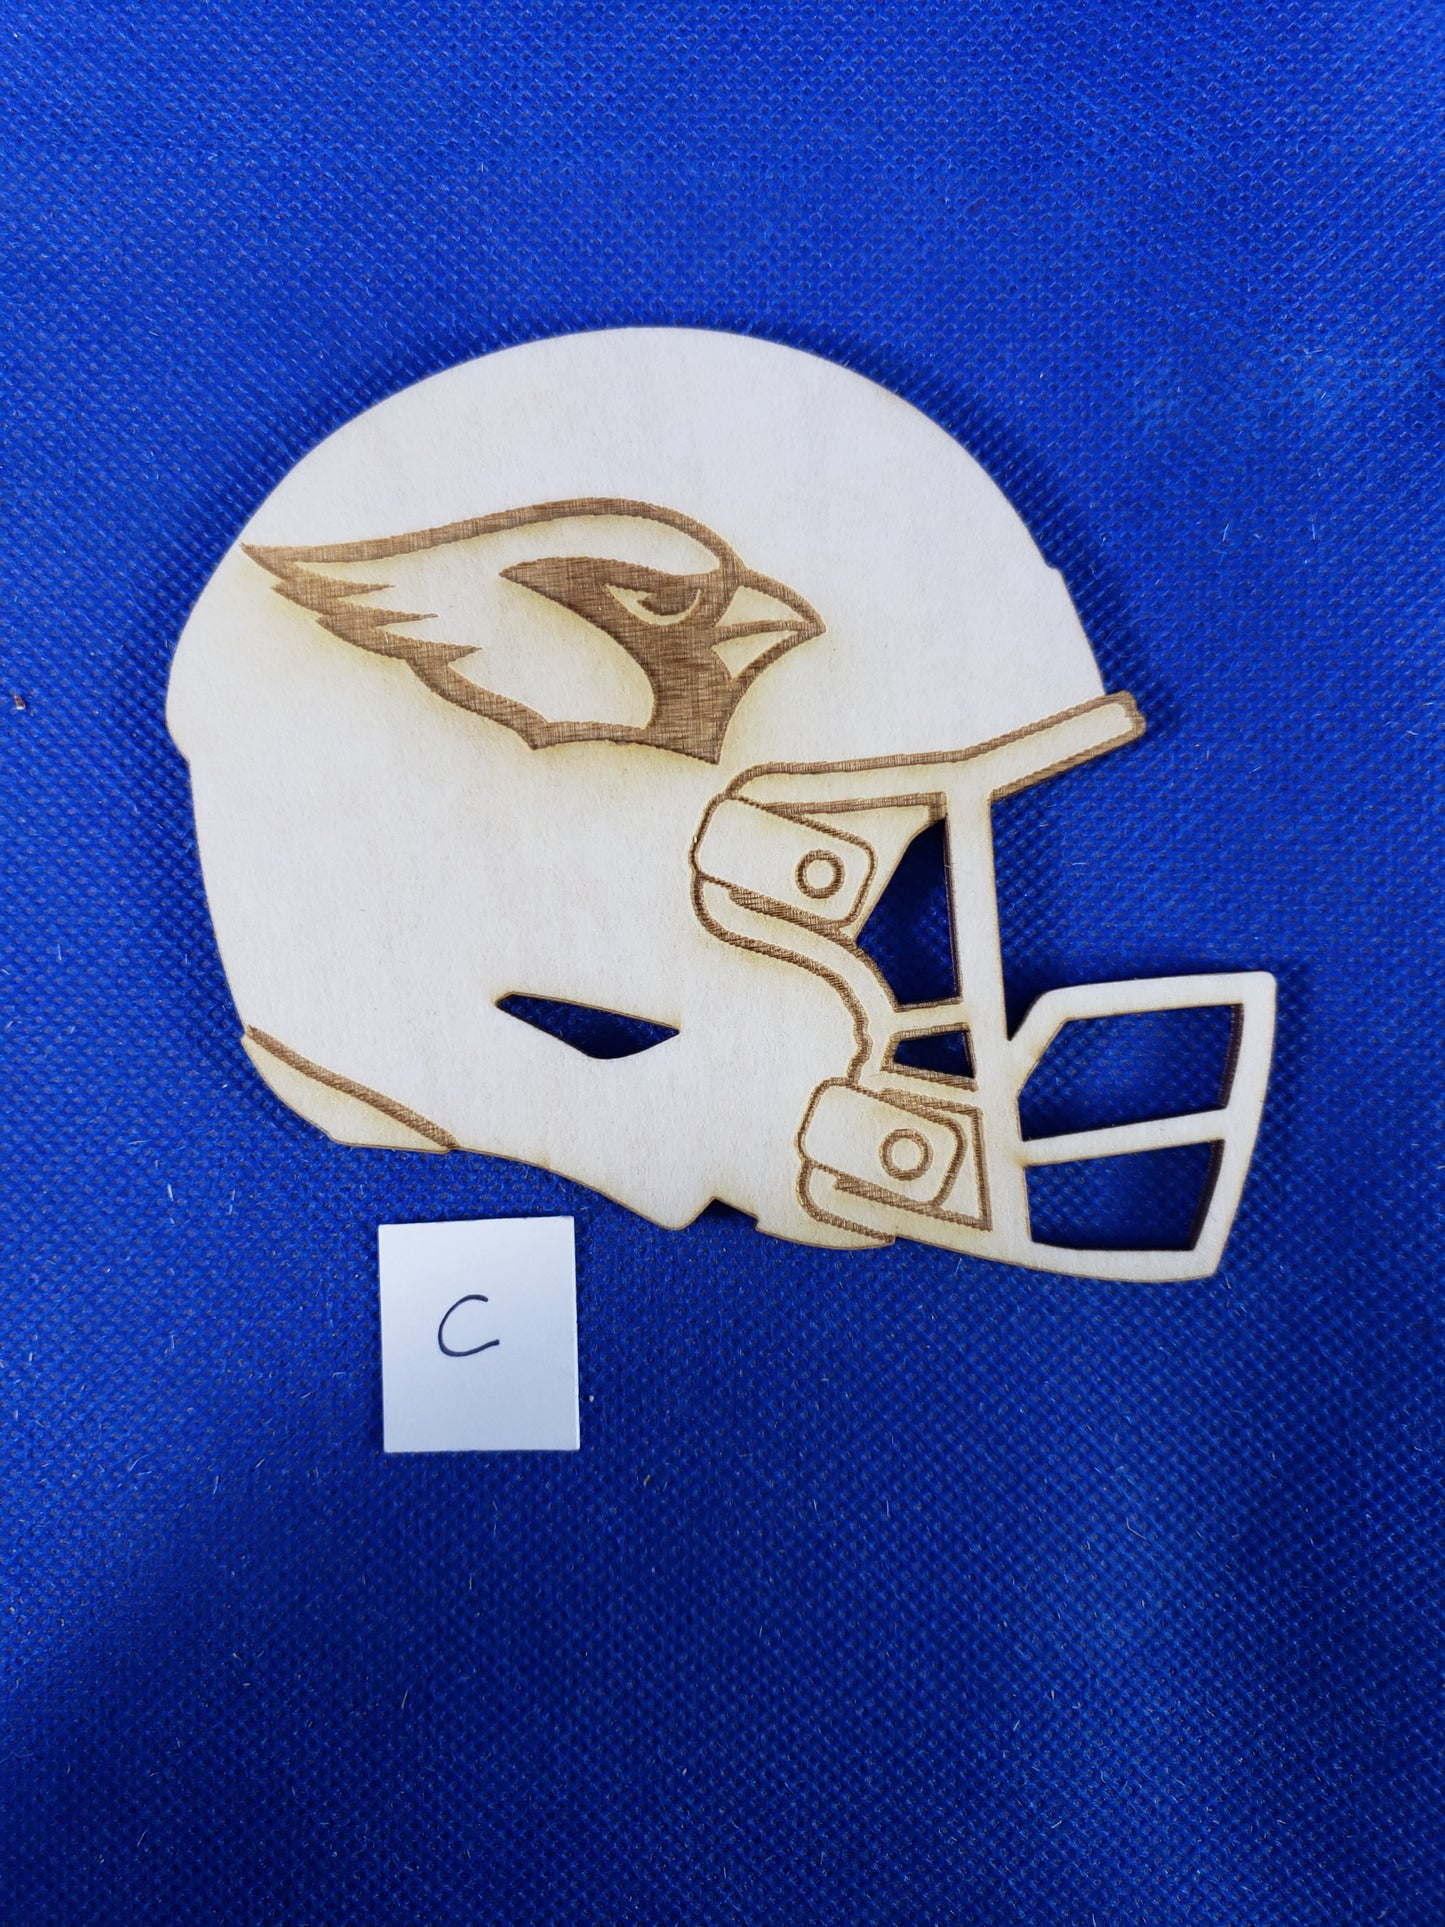 Arizona Cardinals Helmet-Laser cut natural wooden blank